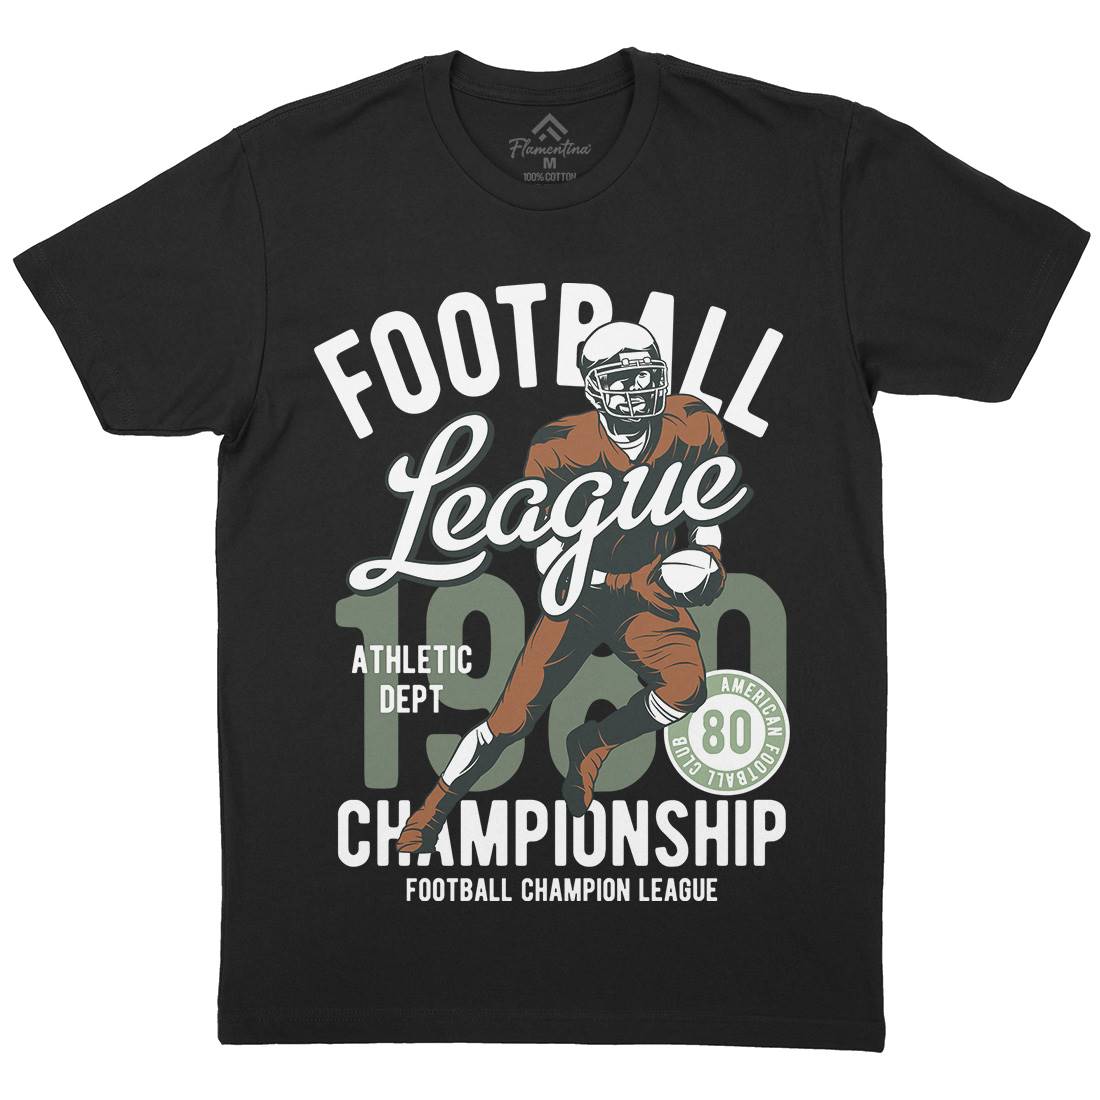 American Football Mens Crew Neck T-Shirt Sport C840